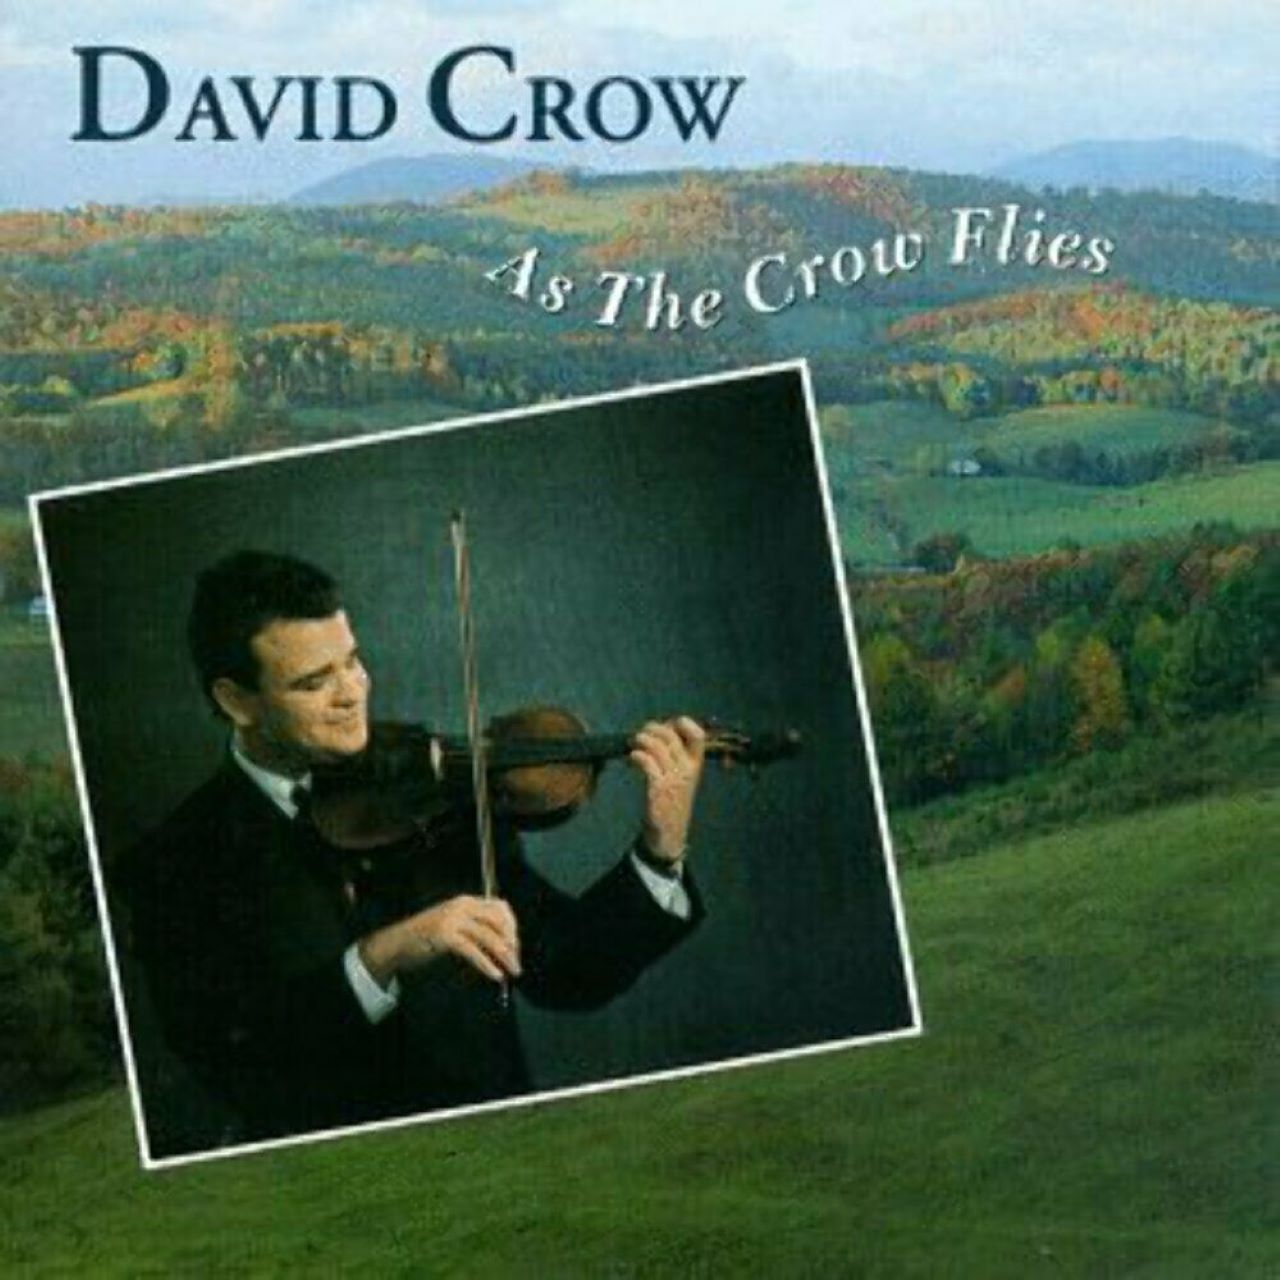 David Crow - As The Crow Flies cover album